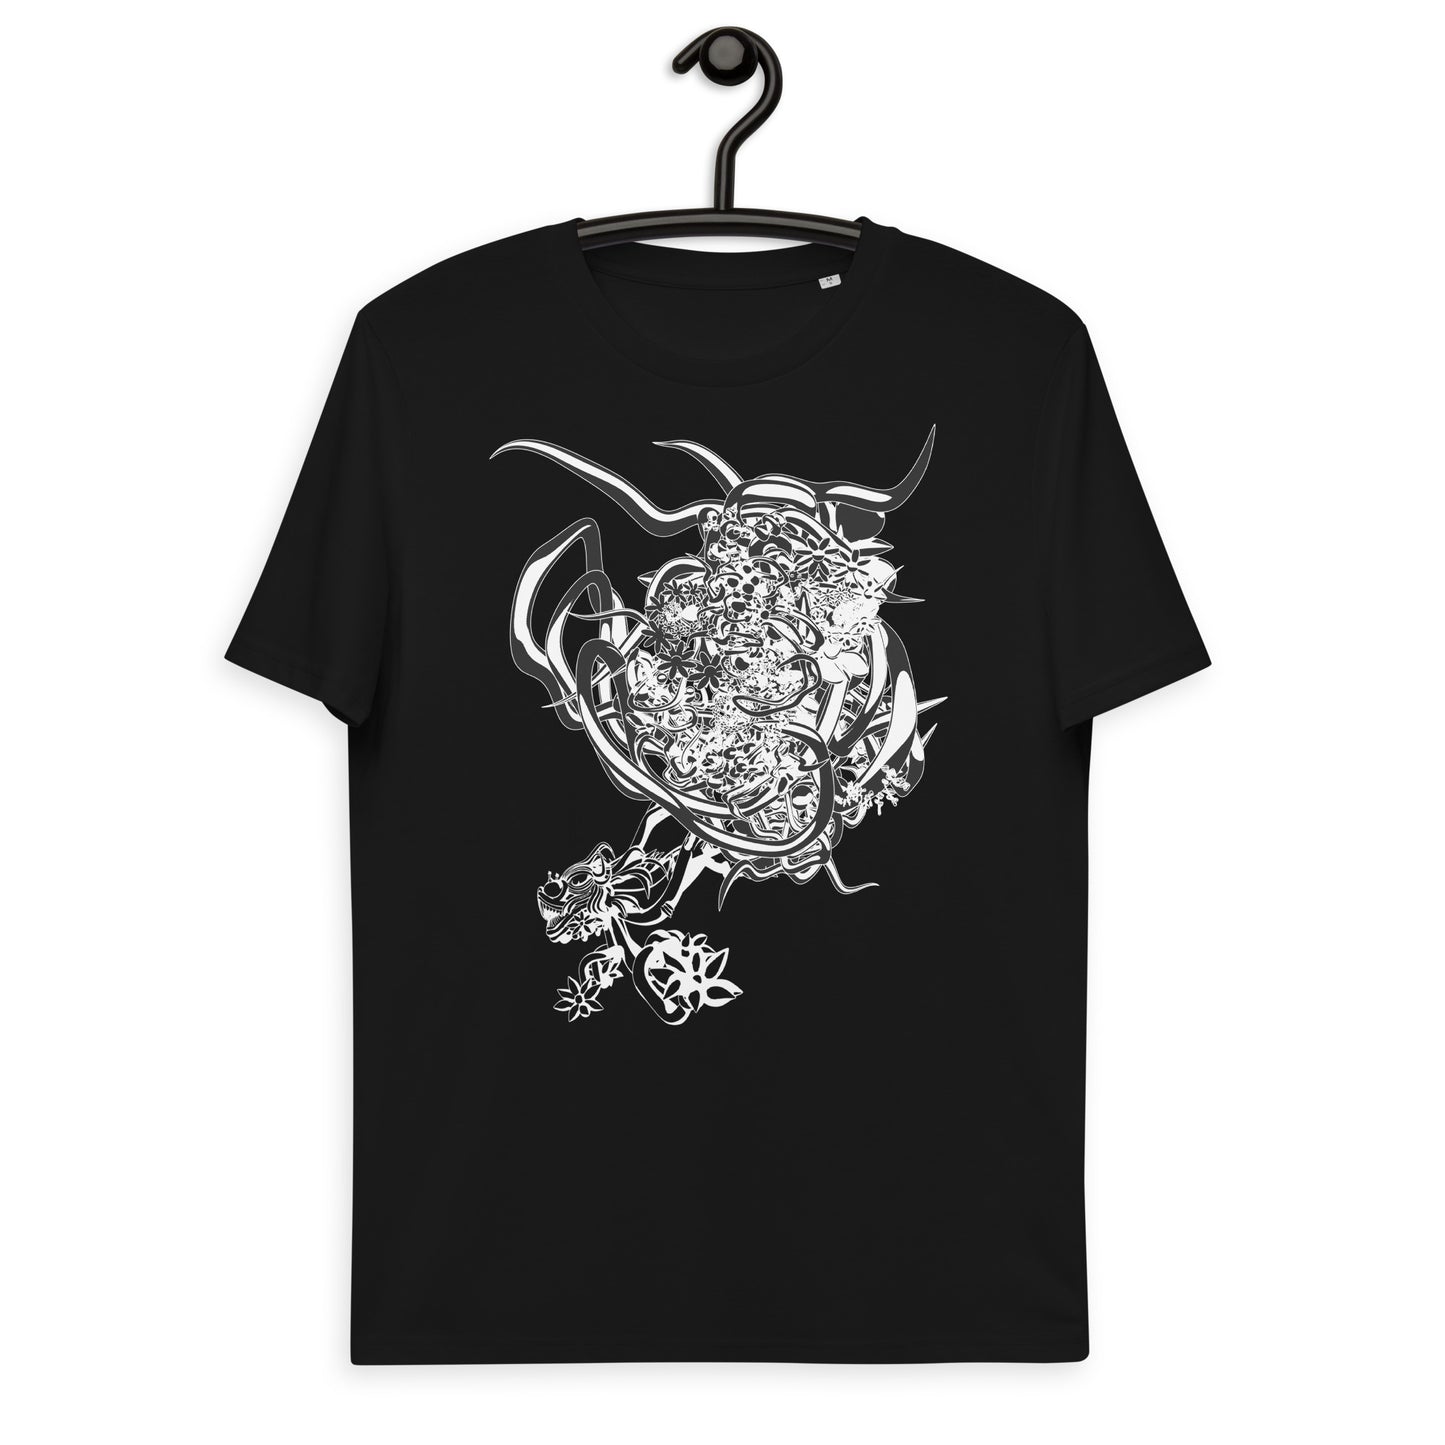 Right Brain - Unisex organic cotton t-shirt